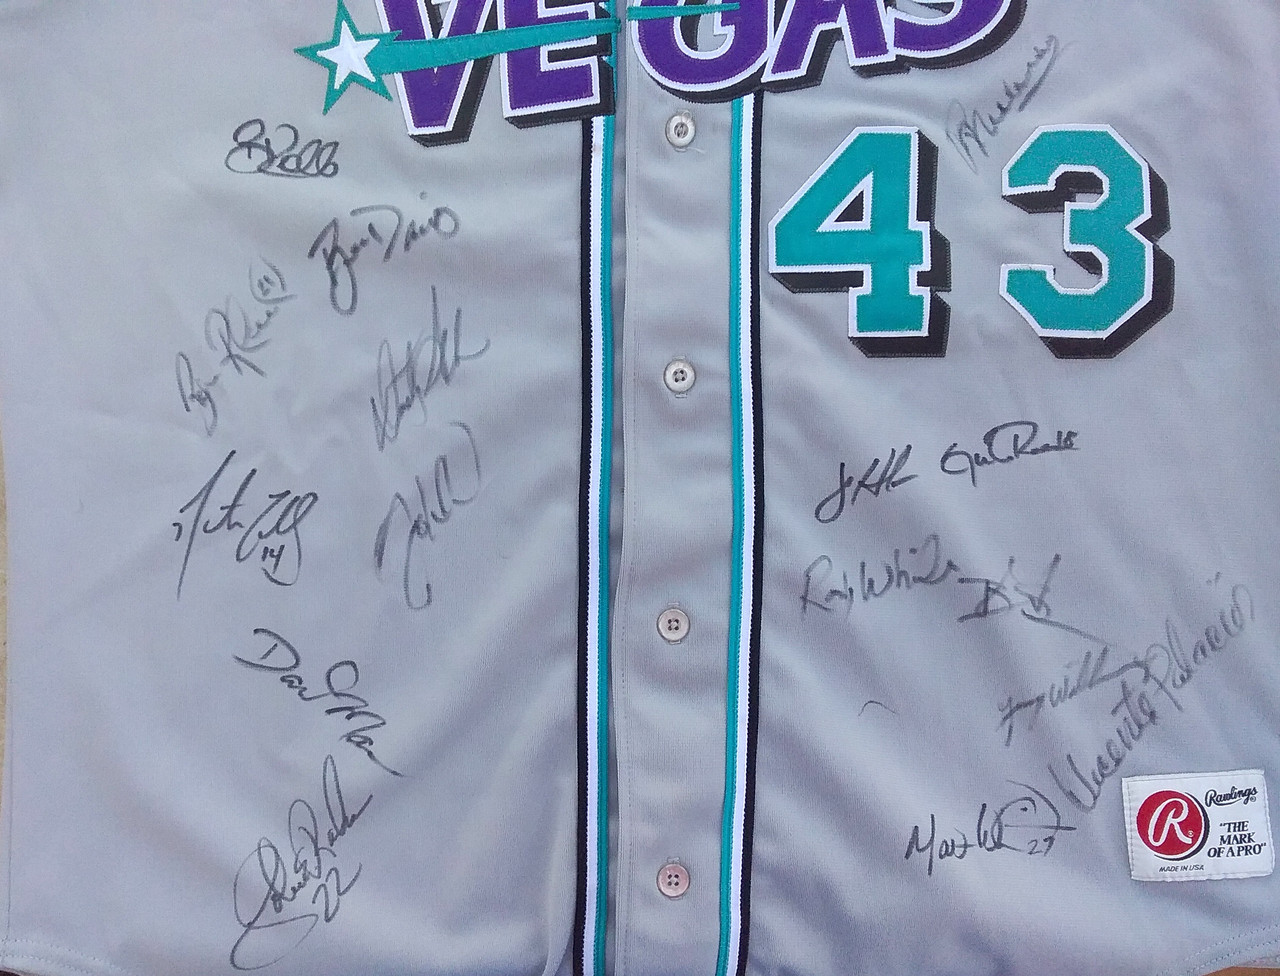 Las Vegas Stars Authentic Game-Worn Autographed Jersey